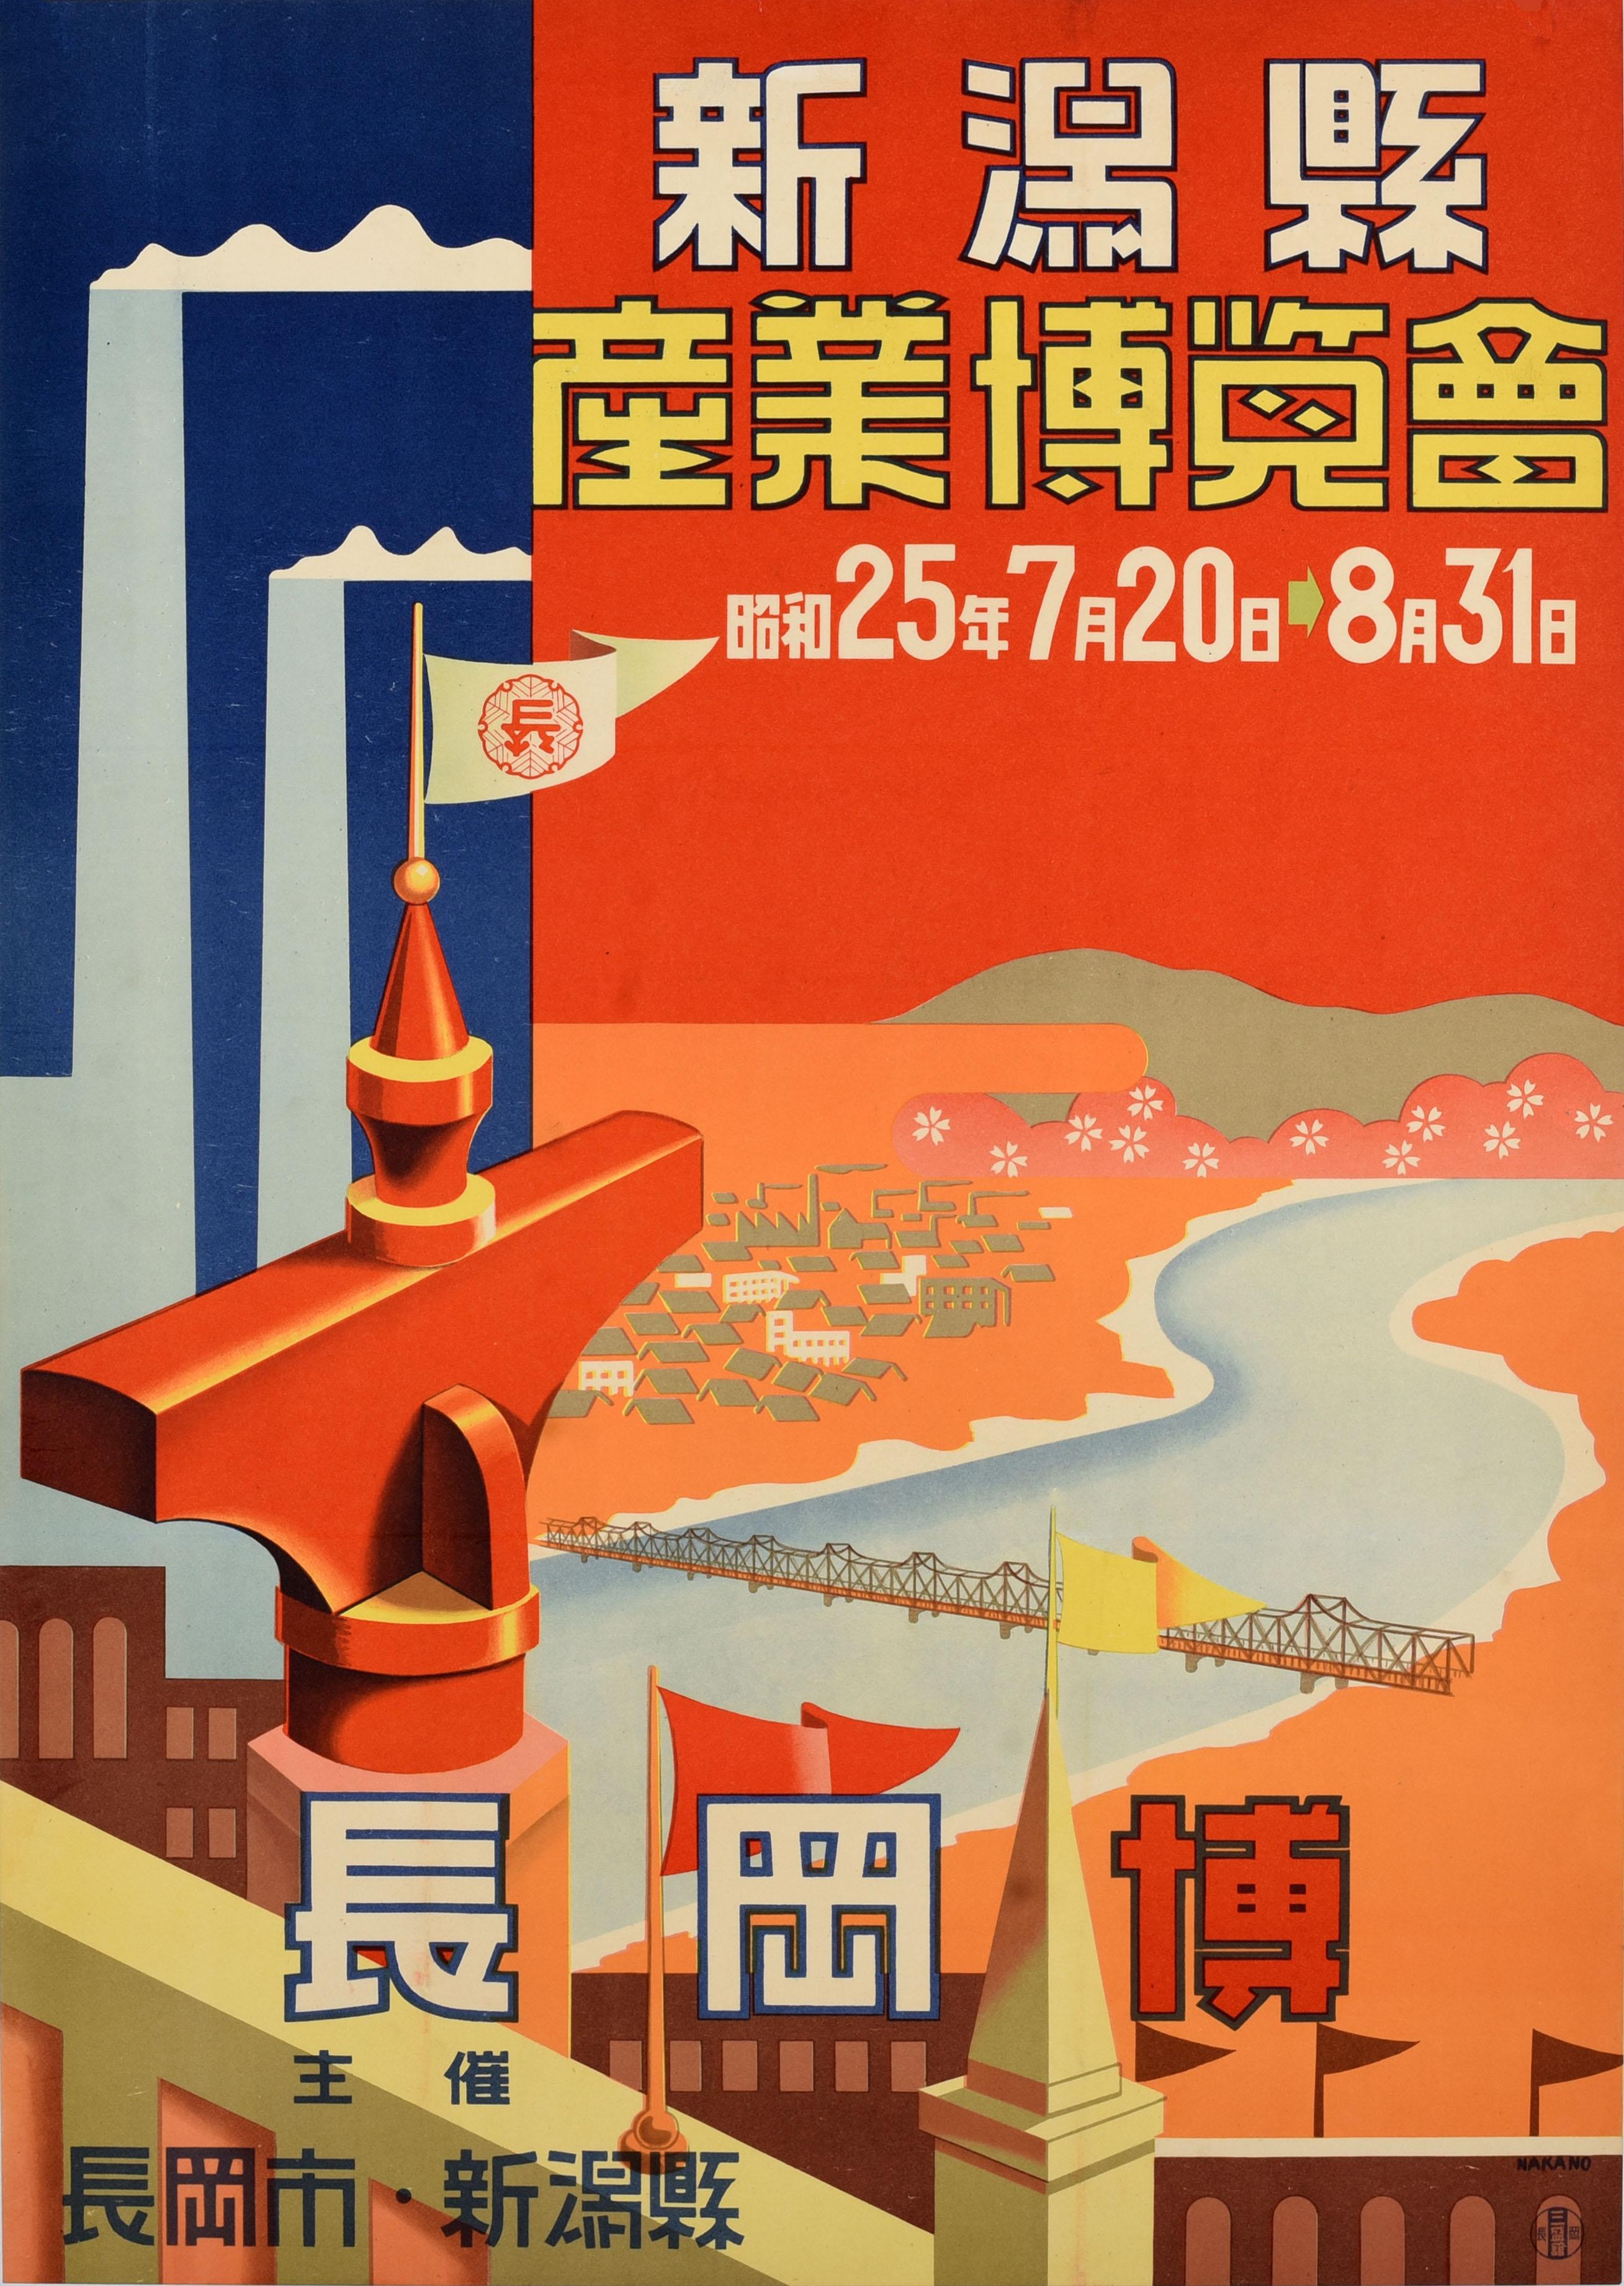 Unknown Print – Original Vintage Asiatisches Reise-Werbeplakat Niigata Industry Expo Japan, Vintage